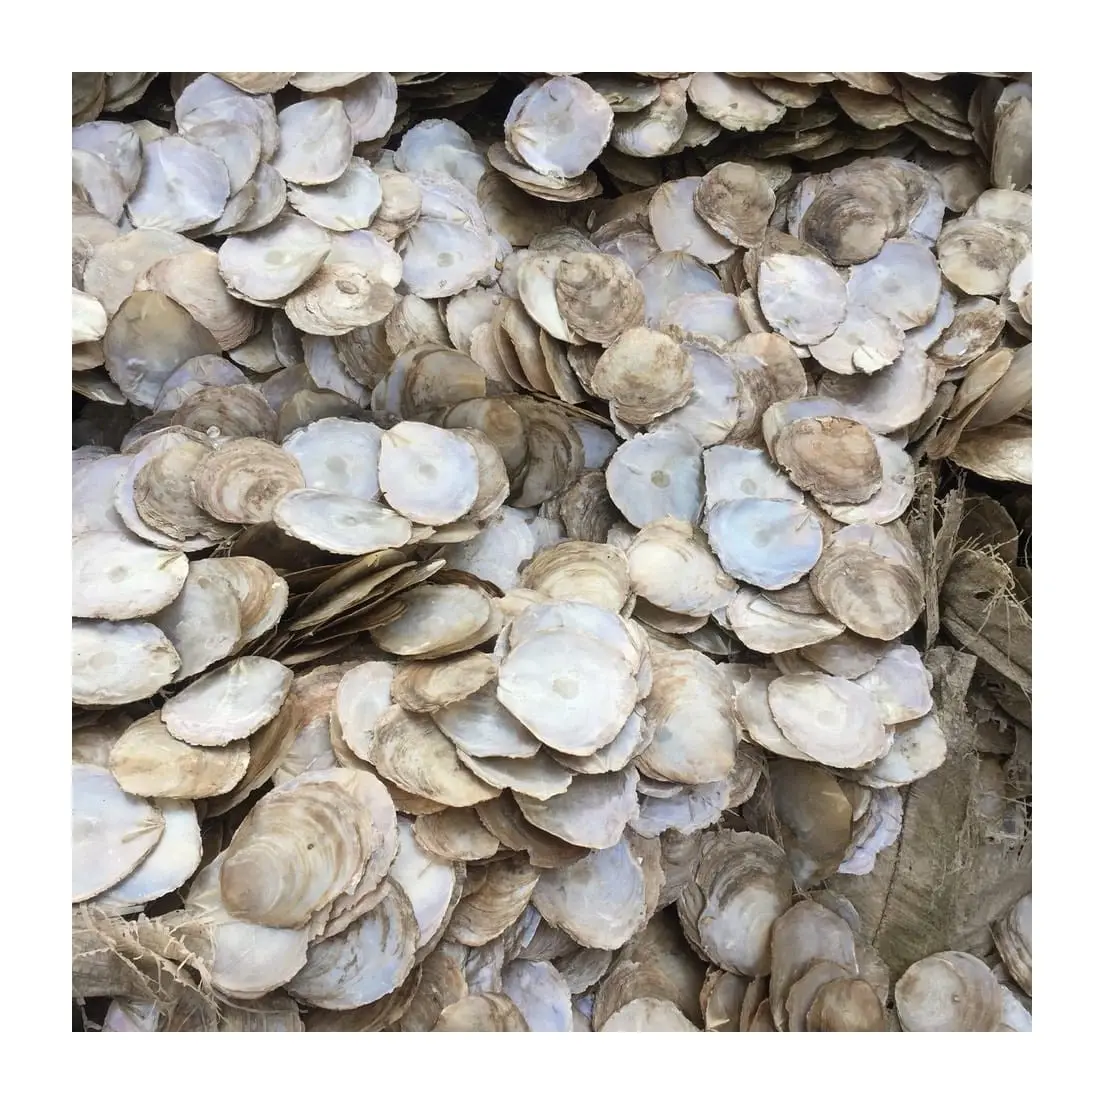 Raw unclean unpolished or polished capiz shell bulk quantity wholesale natural dried ocean capiz seashells